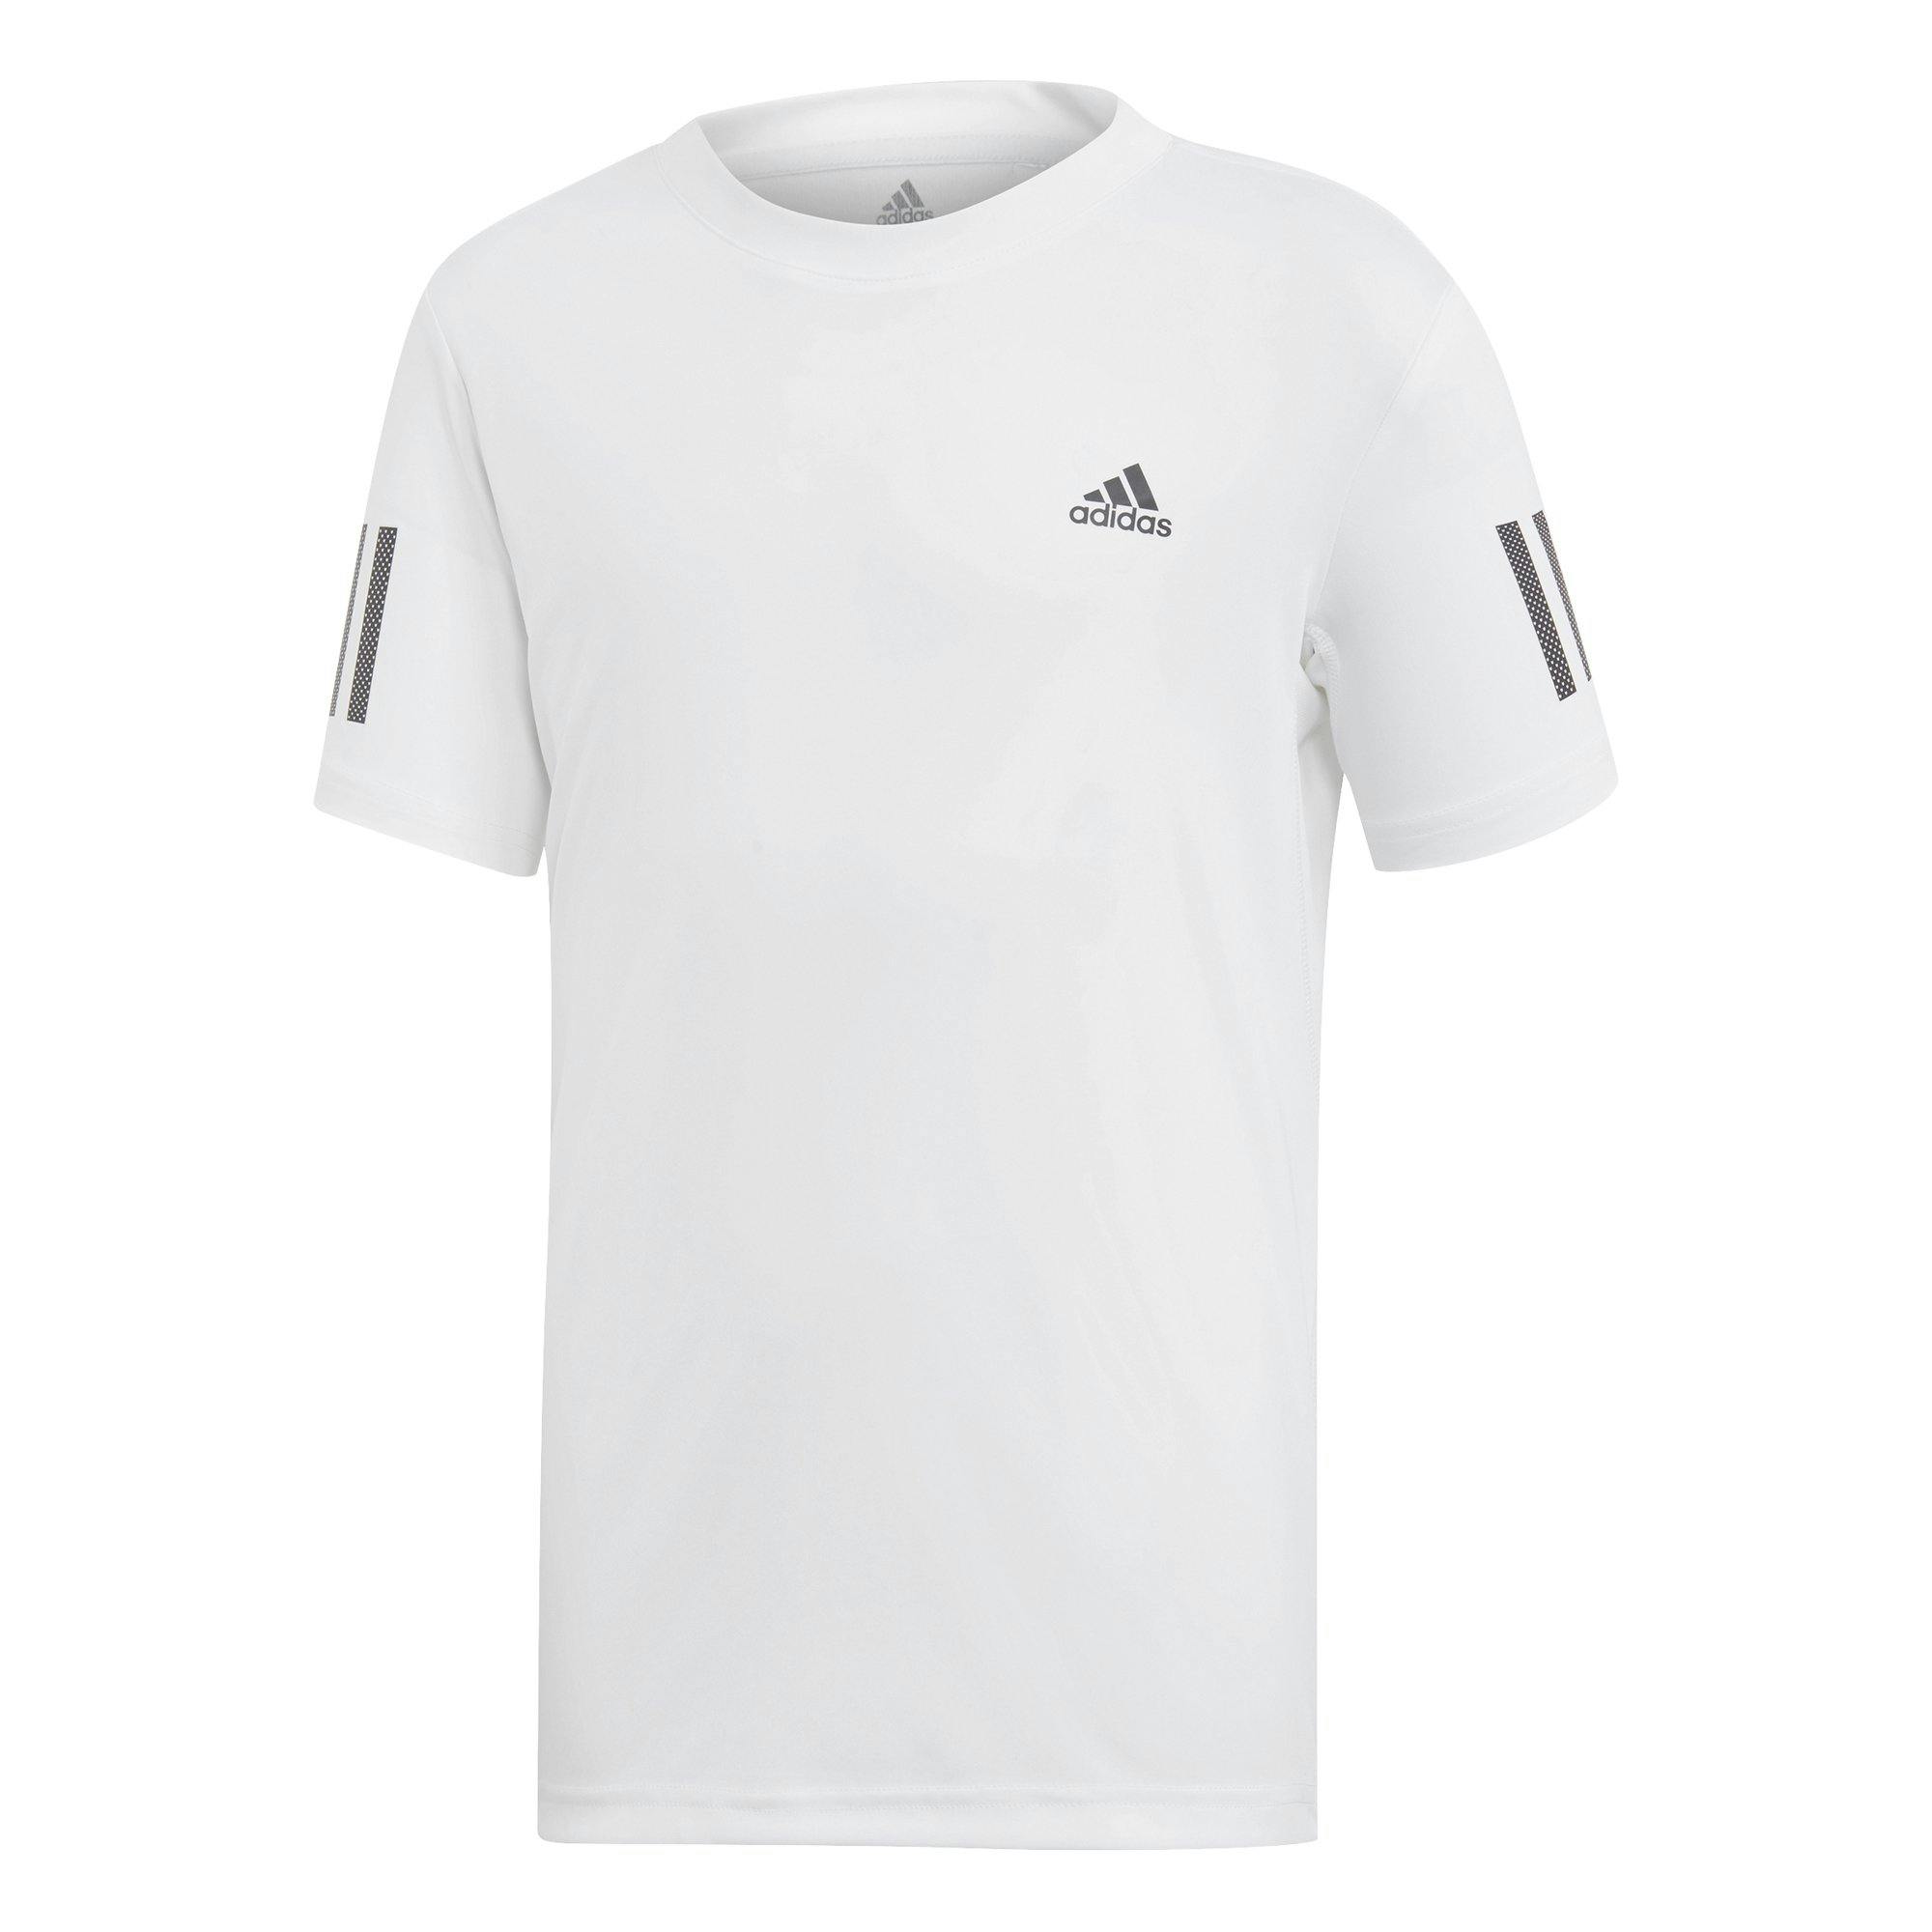 Adidas 3-Stripes Club Boys Short Sleeve Crew Tennis Shirt